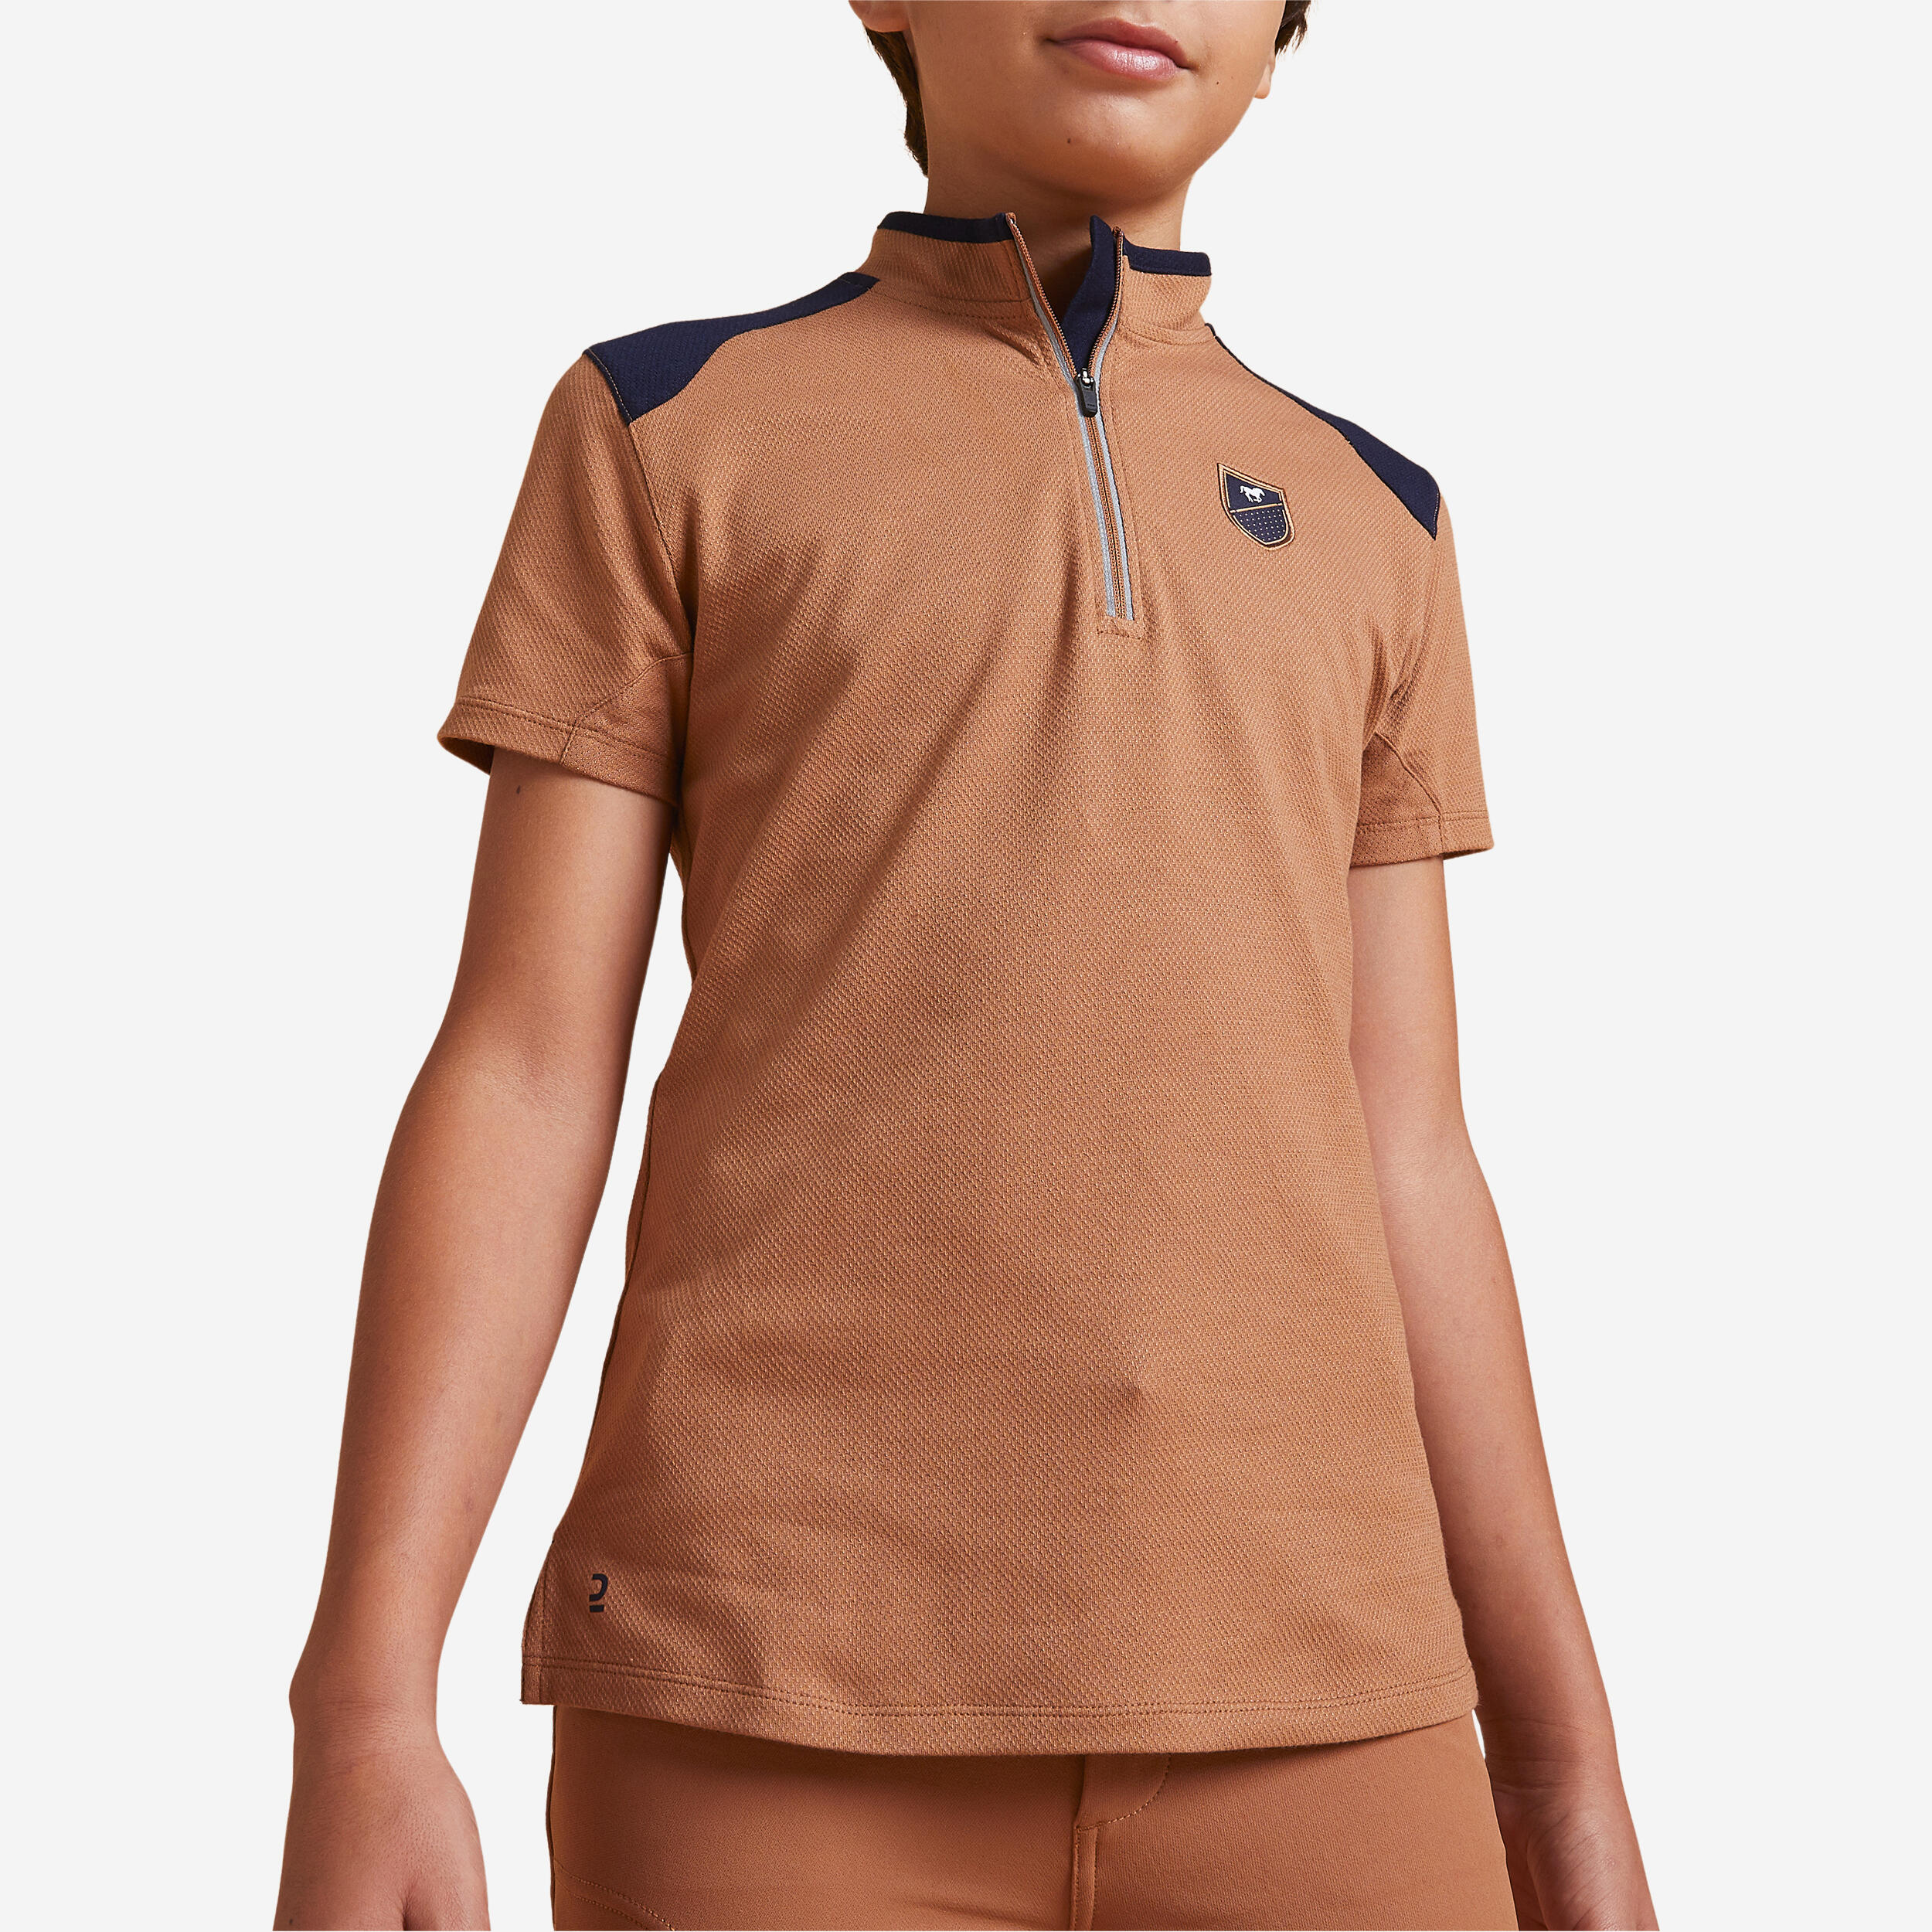 FOUGANZA Kids' Horse Riding Short-Sleeved Zip-Up Polo Shirt 500 - Caramel